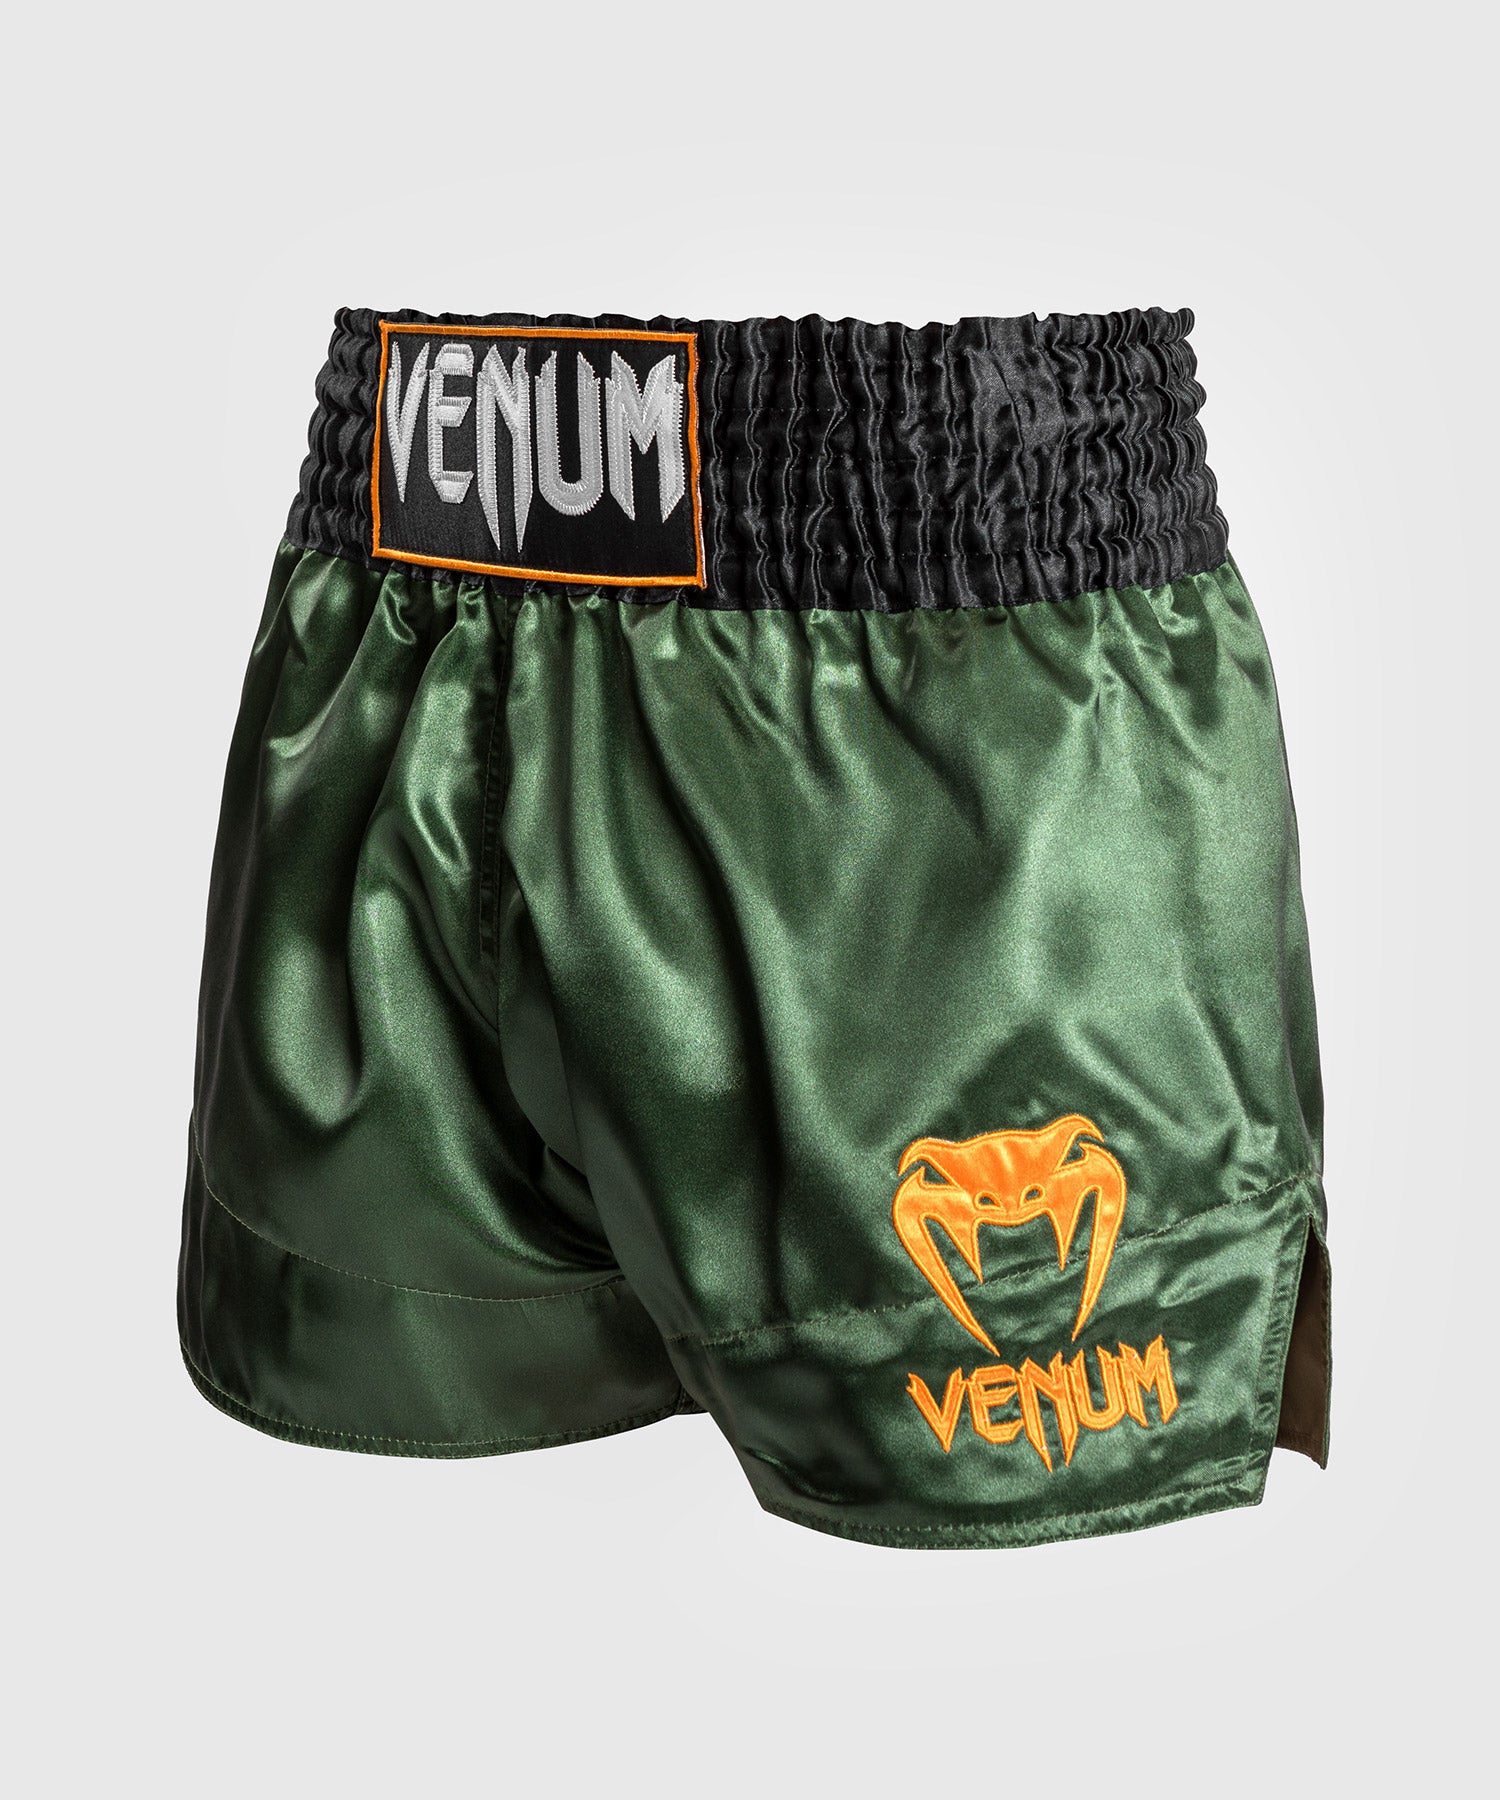 Muay Thai Shorts Classic White Gold : Short Venum de Venum